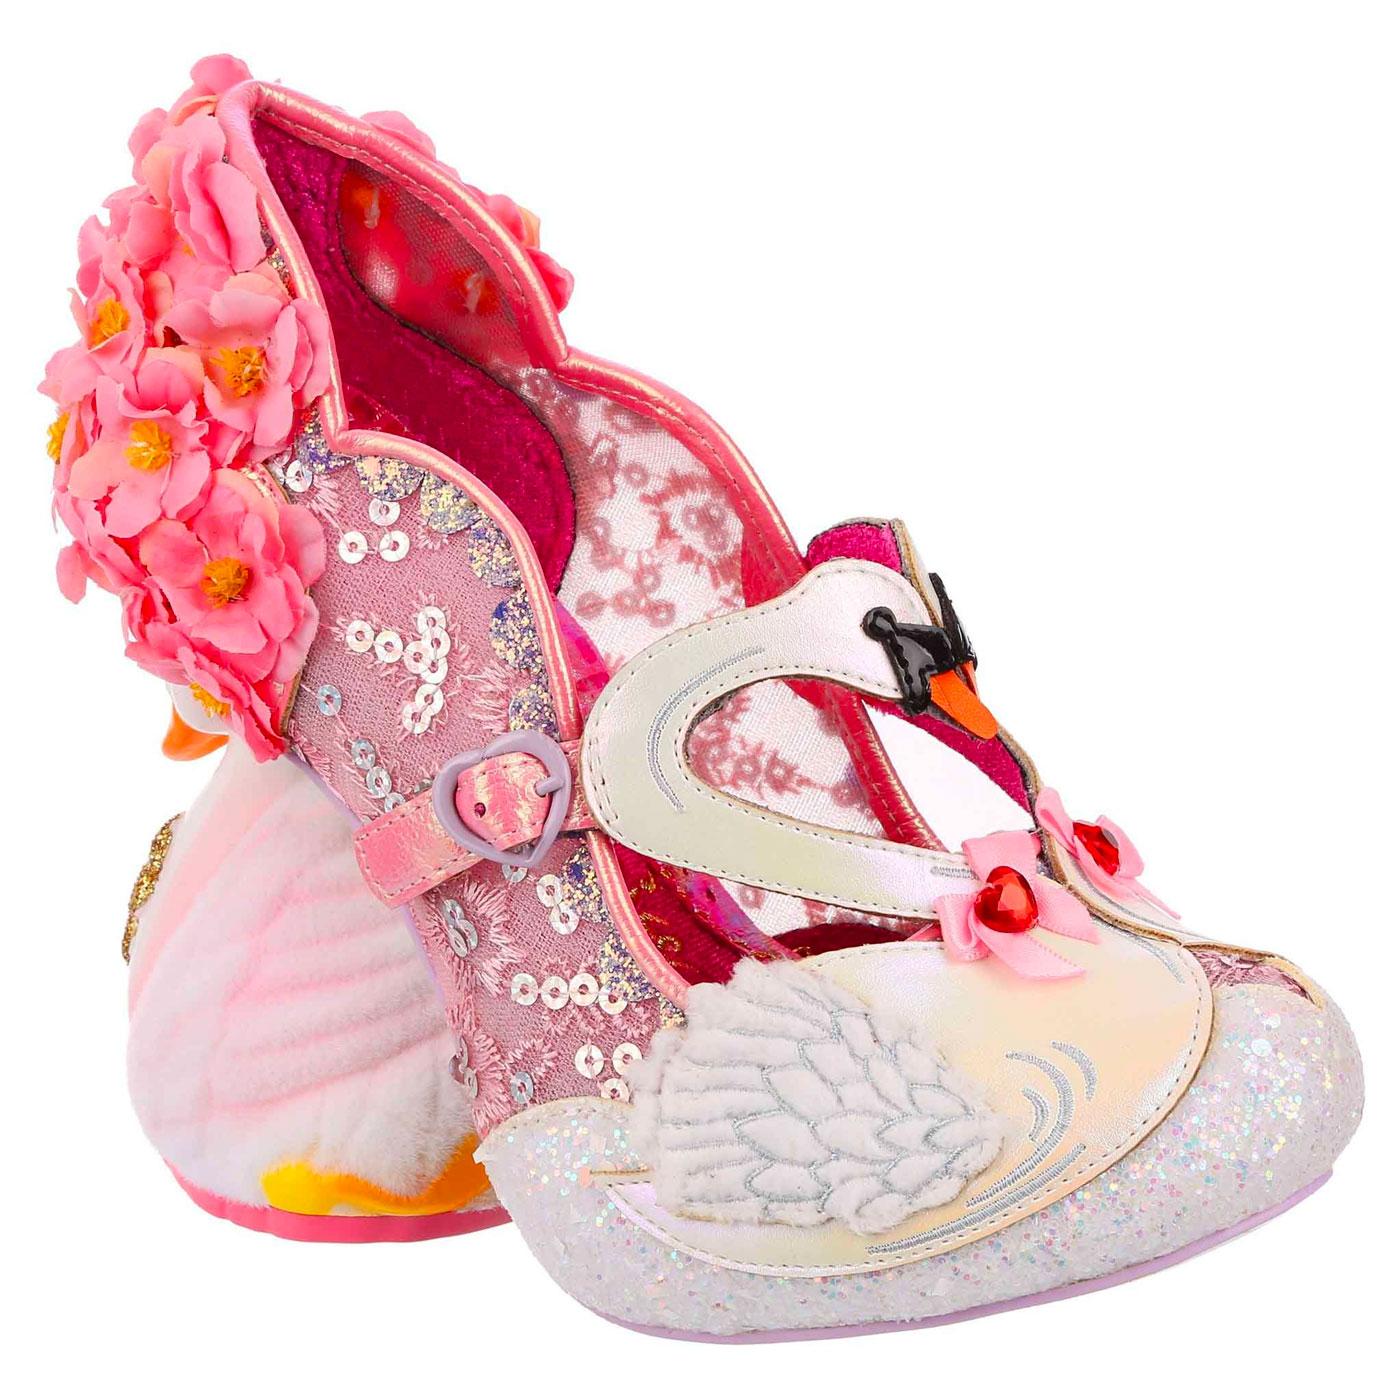 Pedalo Date IRREGULAR CHOICE Retro Swan Heel Shoes